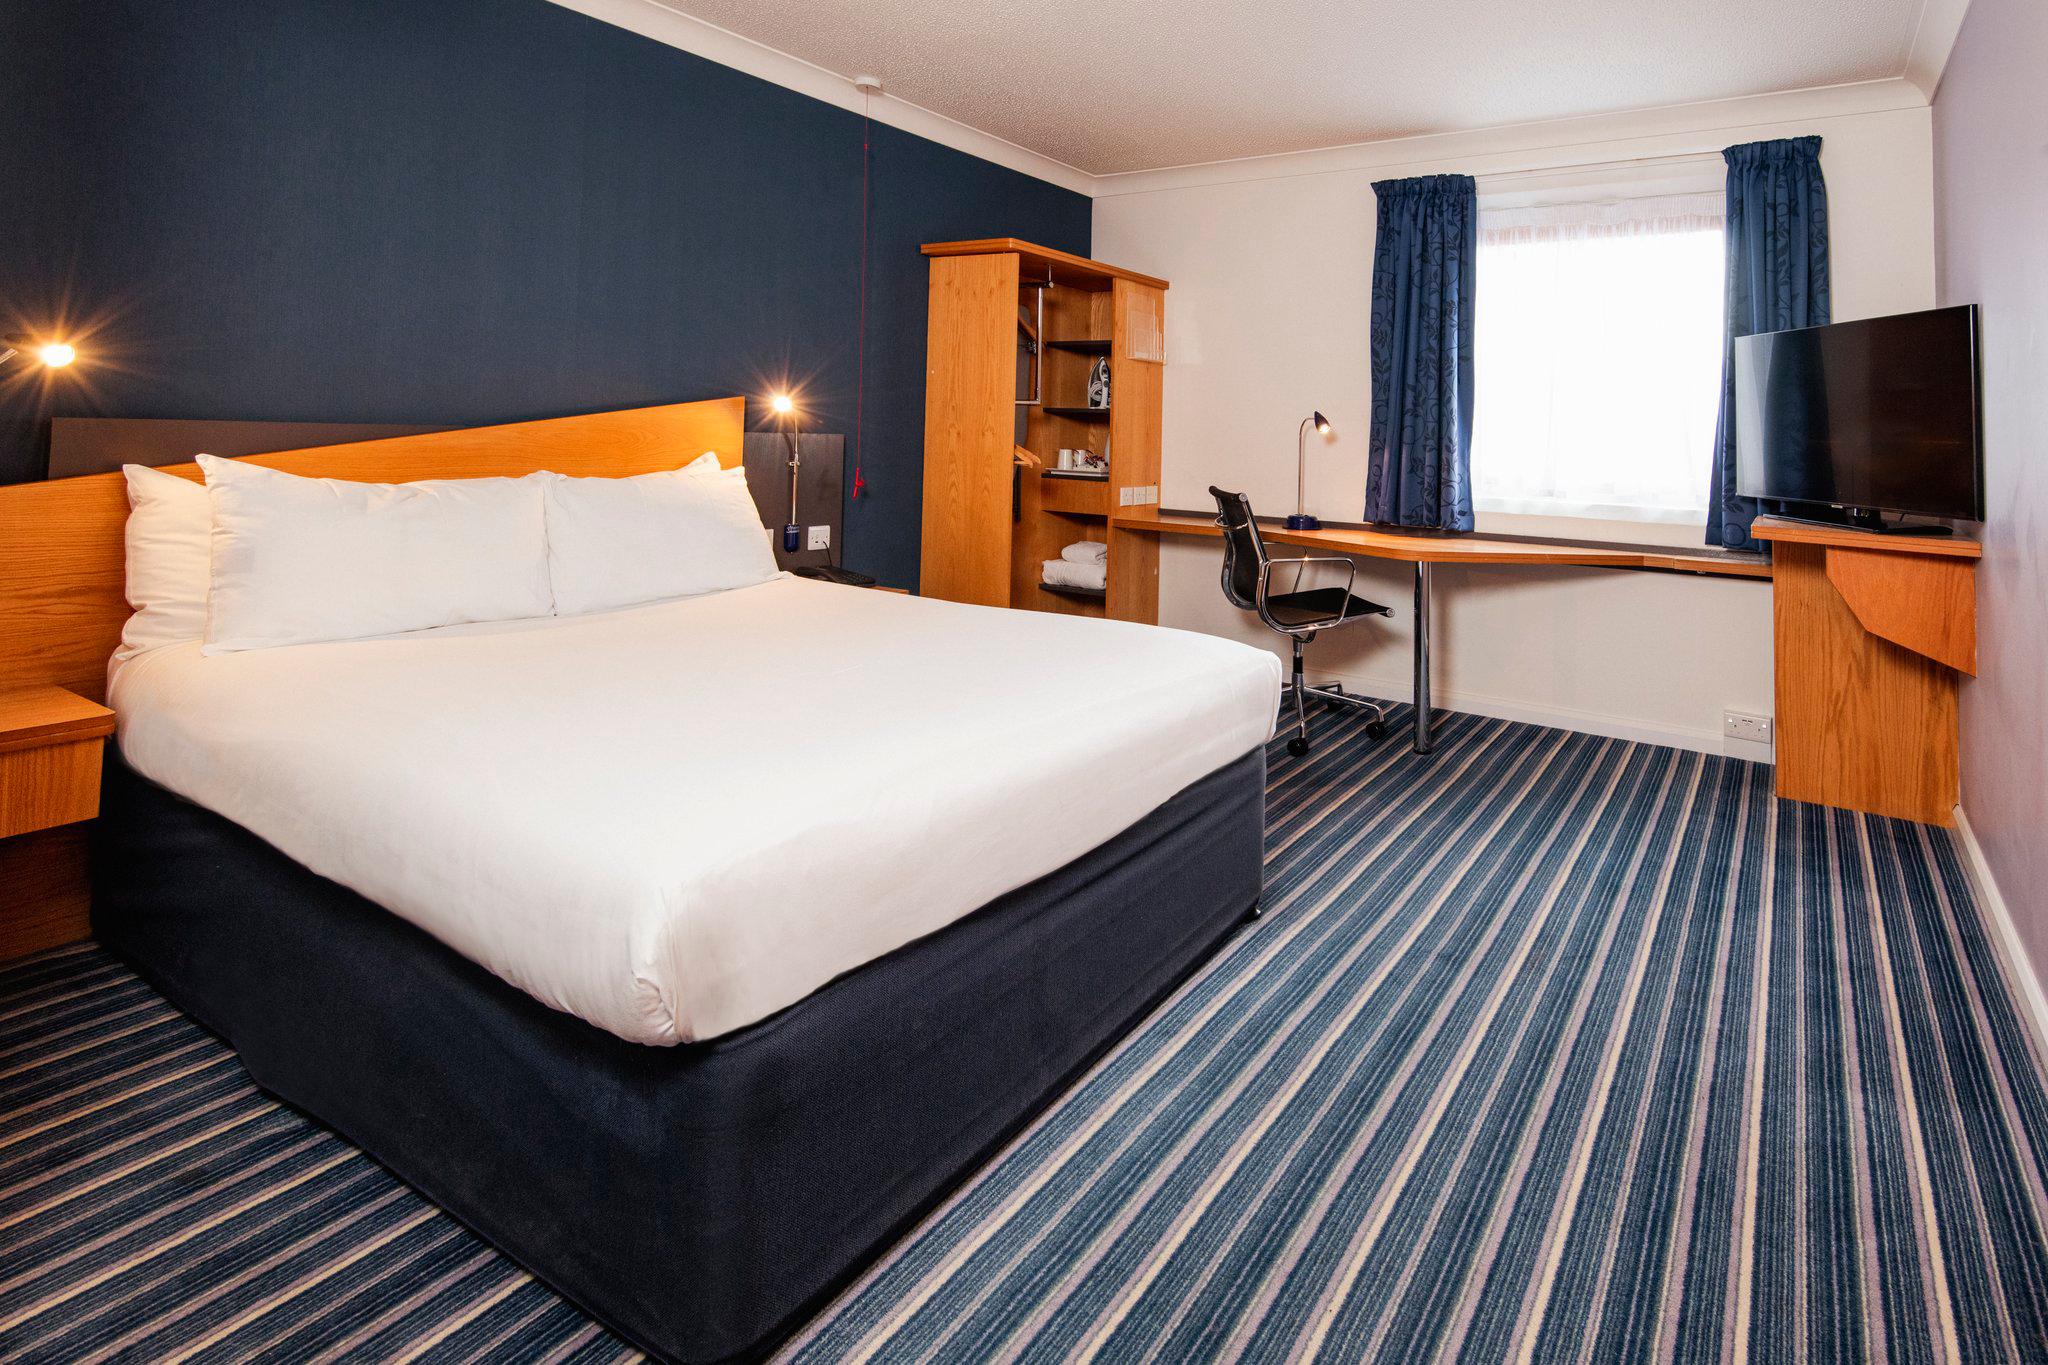 Holiday Inn Express Southampton - West, an IHG Hotel Southampton 03719 021550